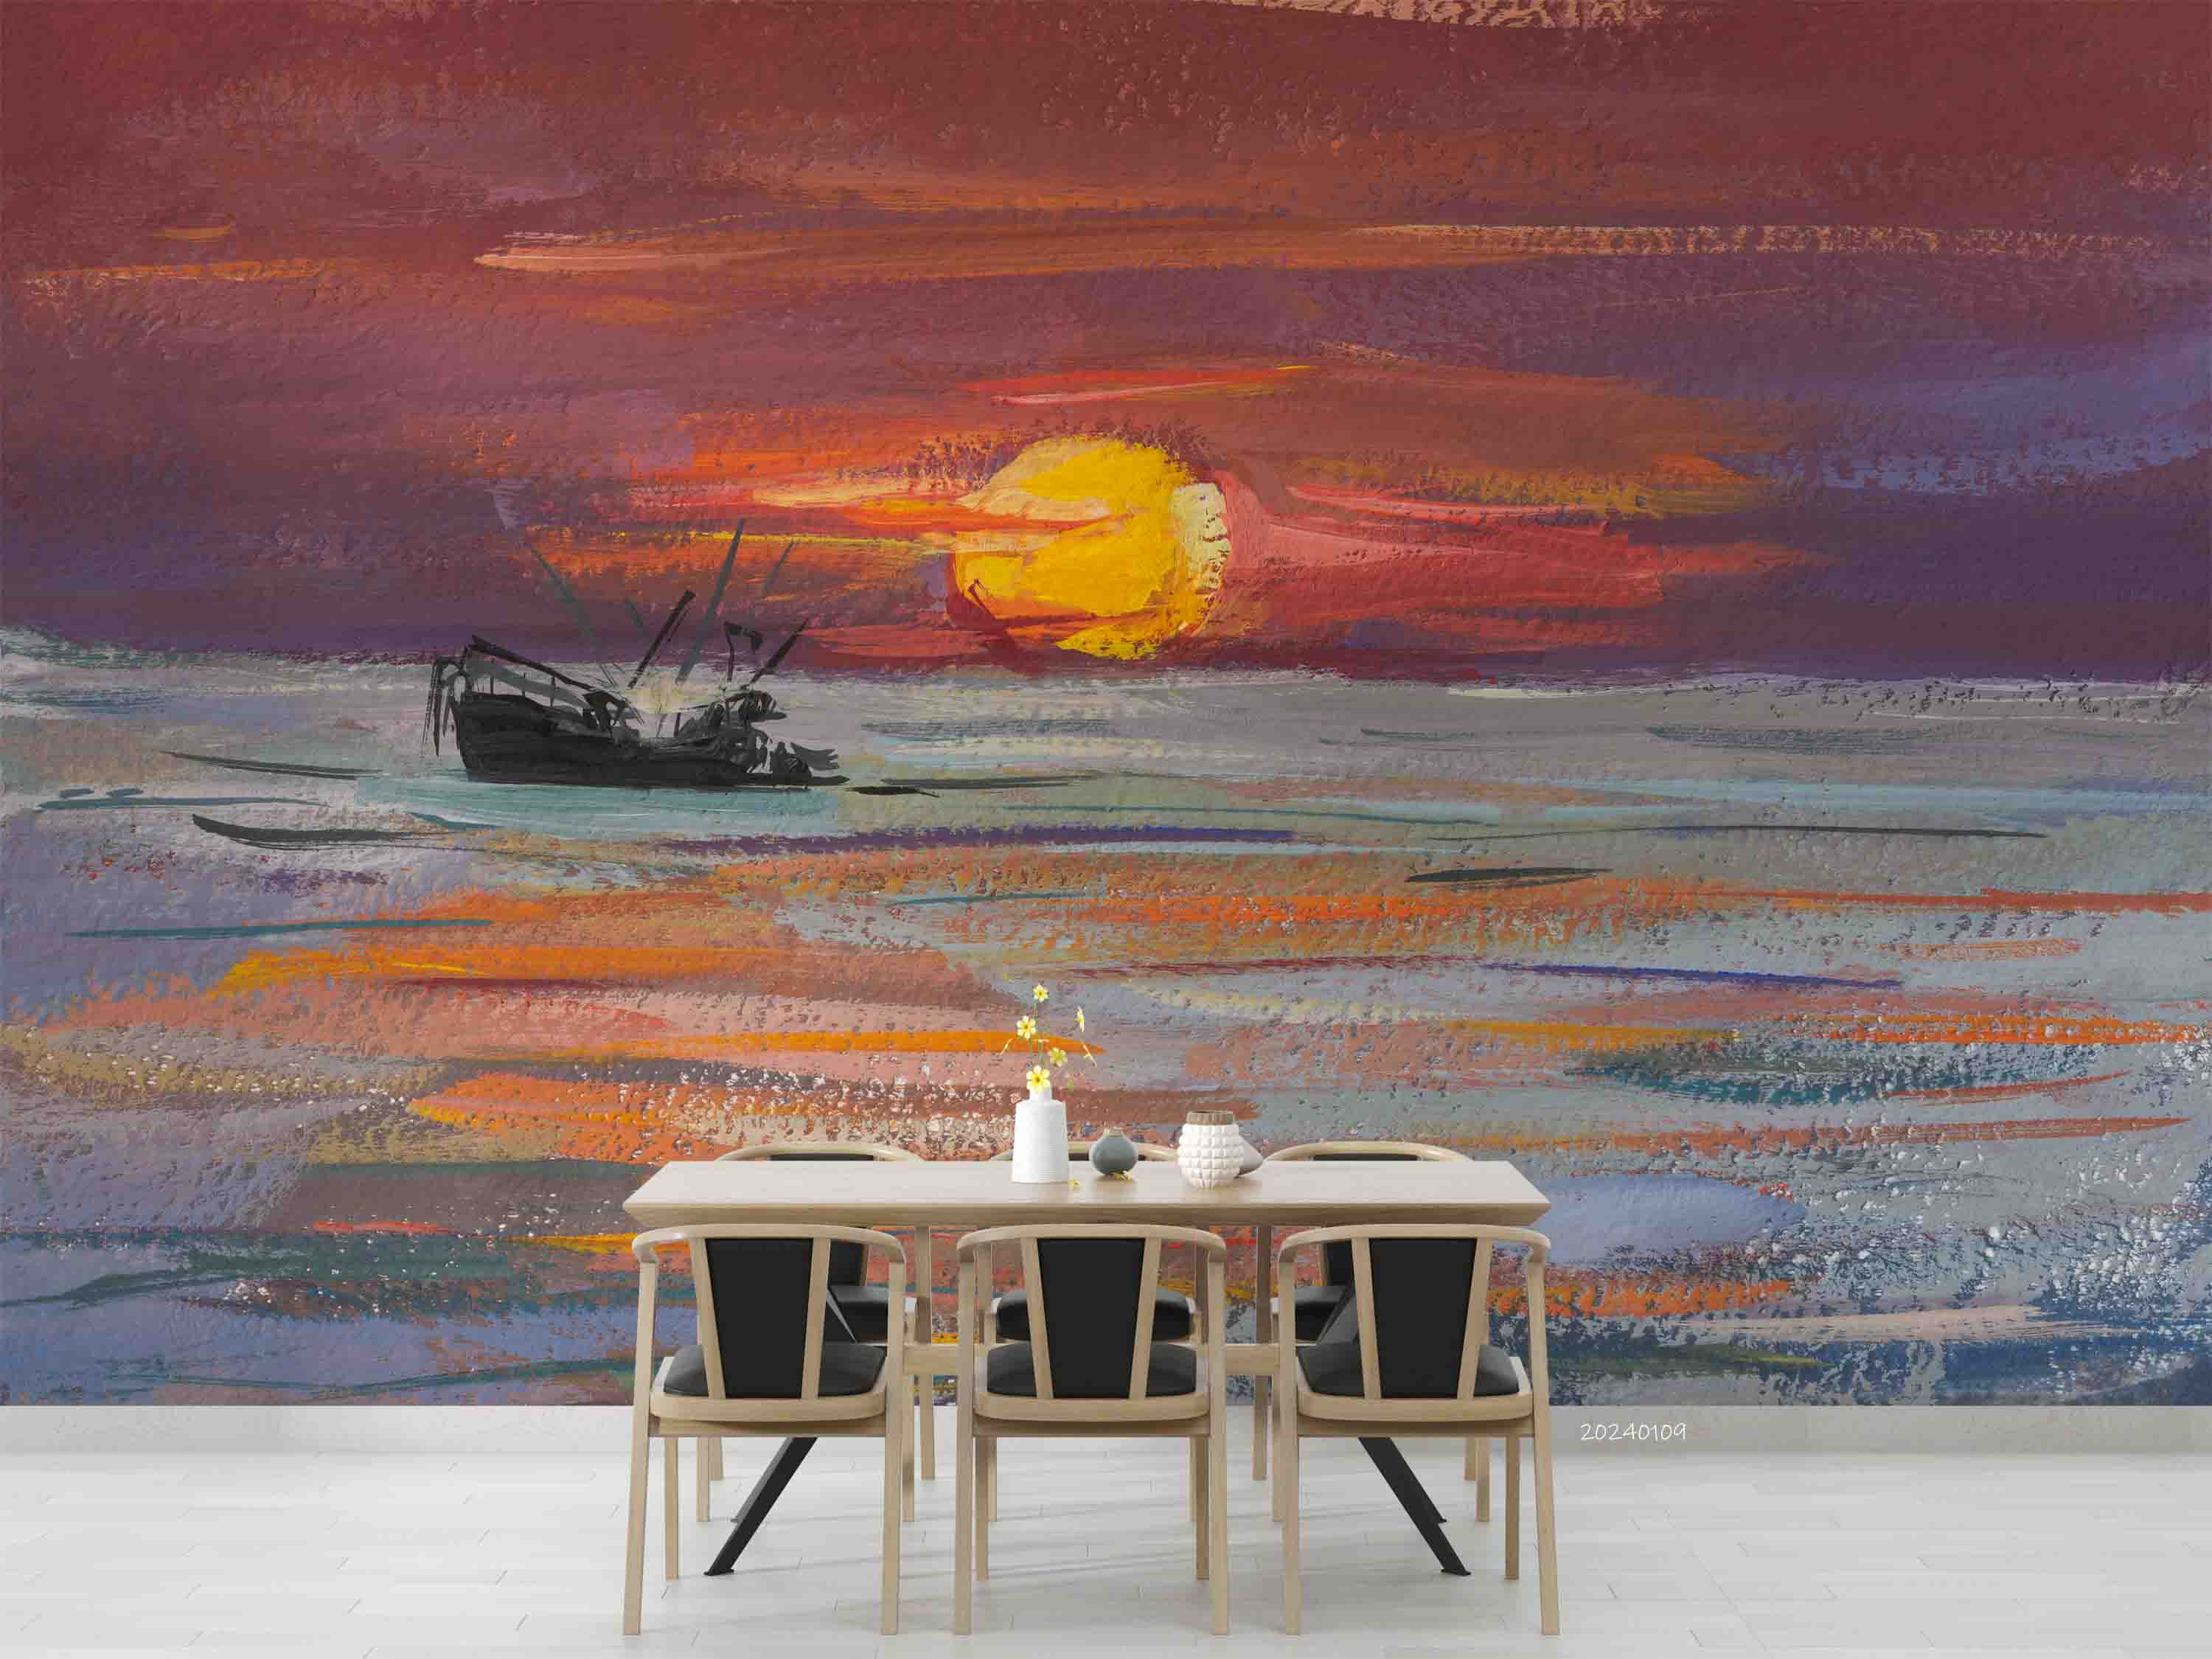 3D Oil Painting Sea Person Ship Sunrise Wave Wall Mural Wallpaper YXL 146